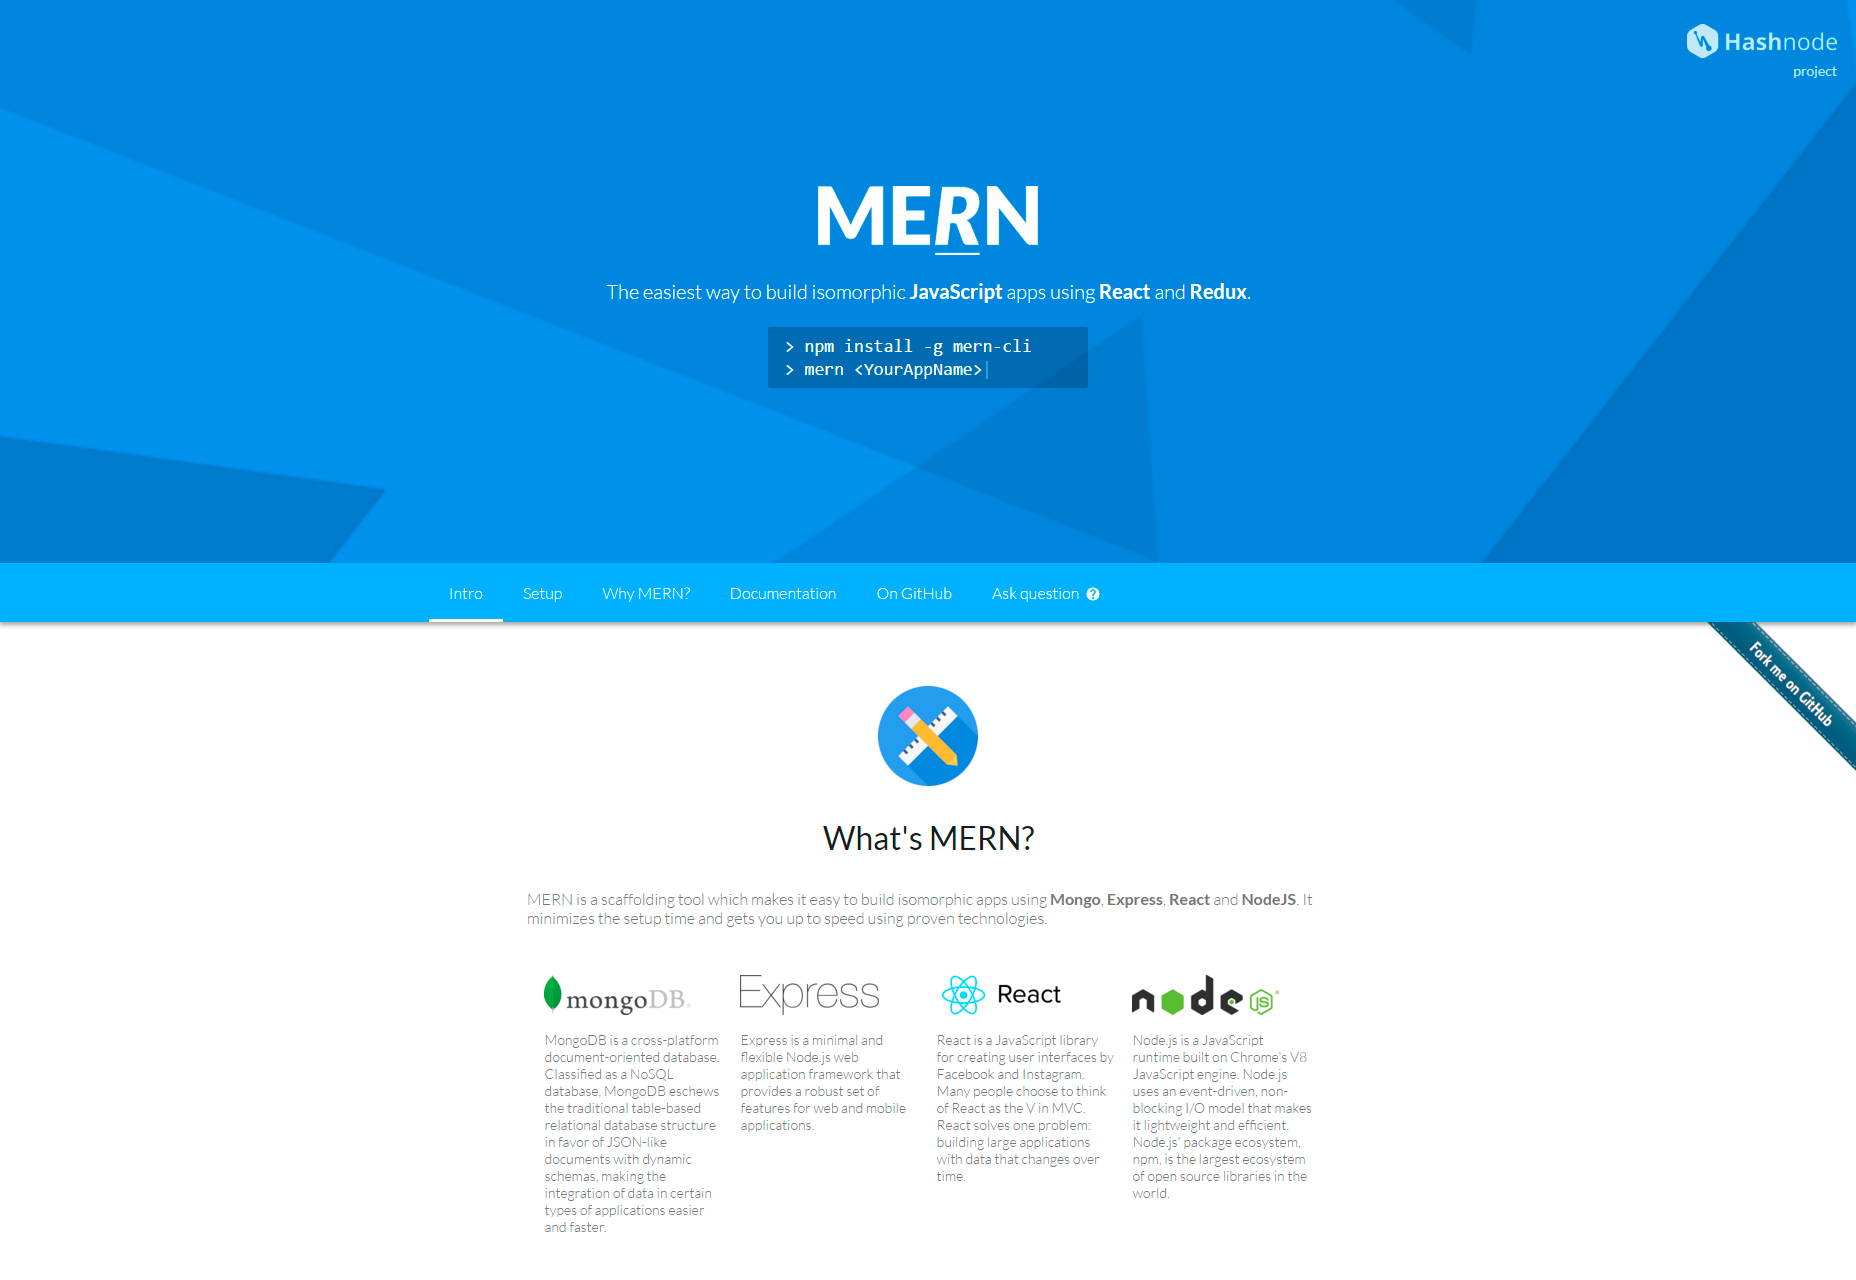 MERN: Isomorphic React & Redux-featured JavaScript Apps Building